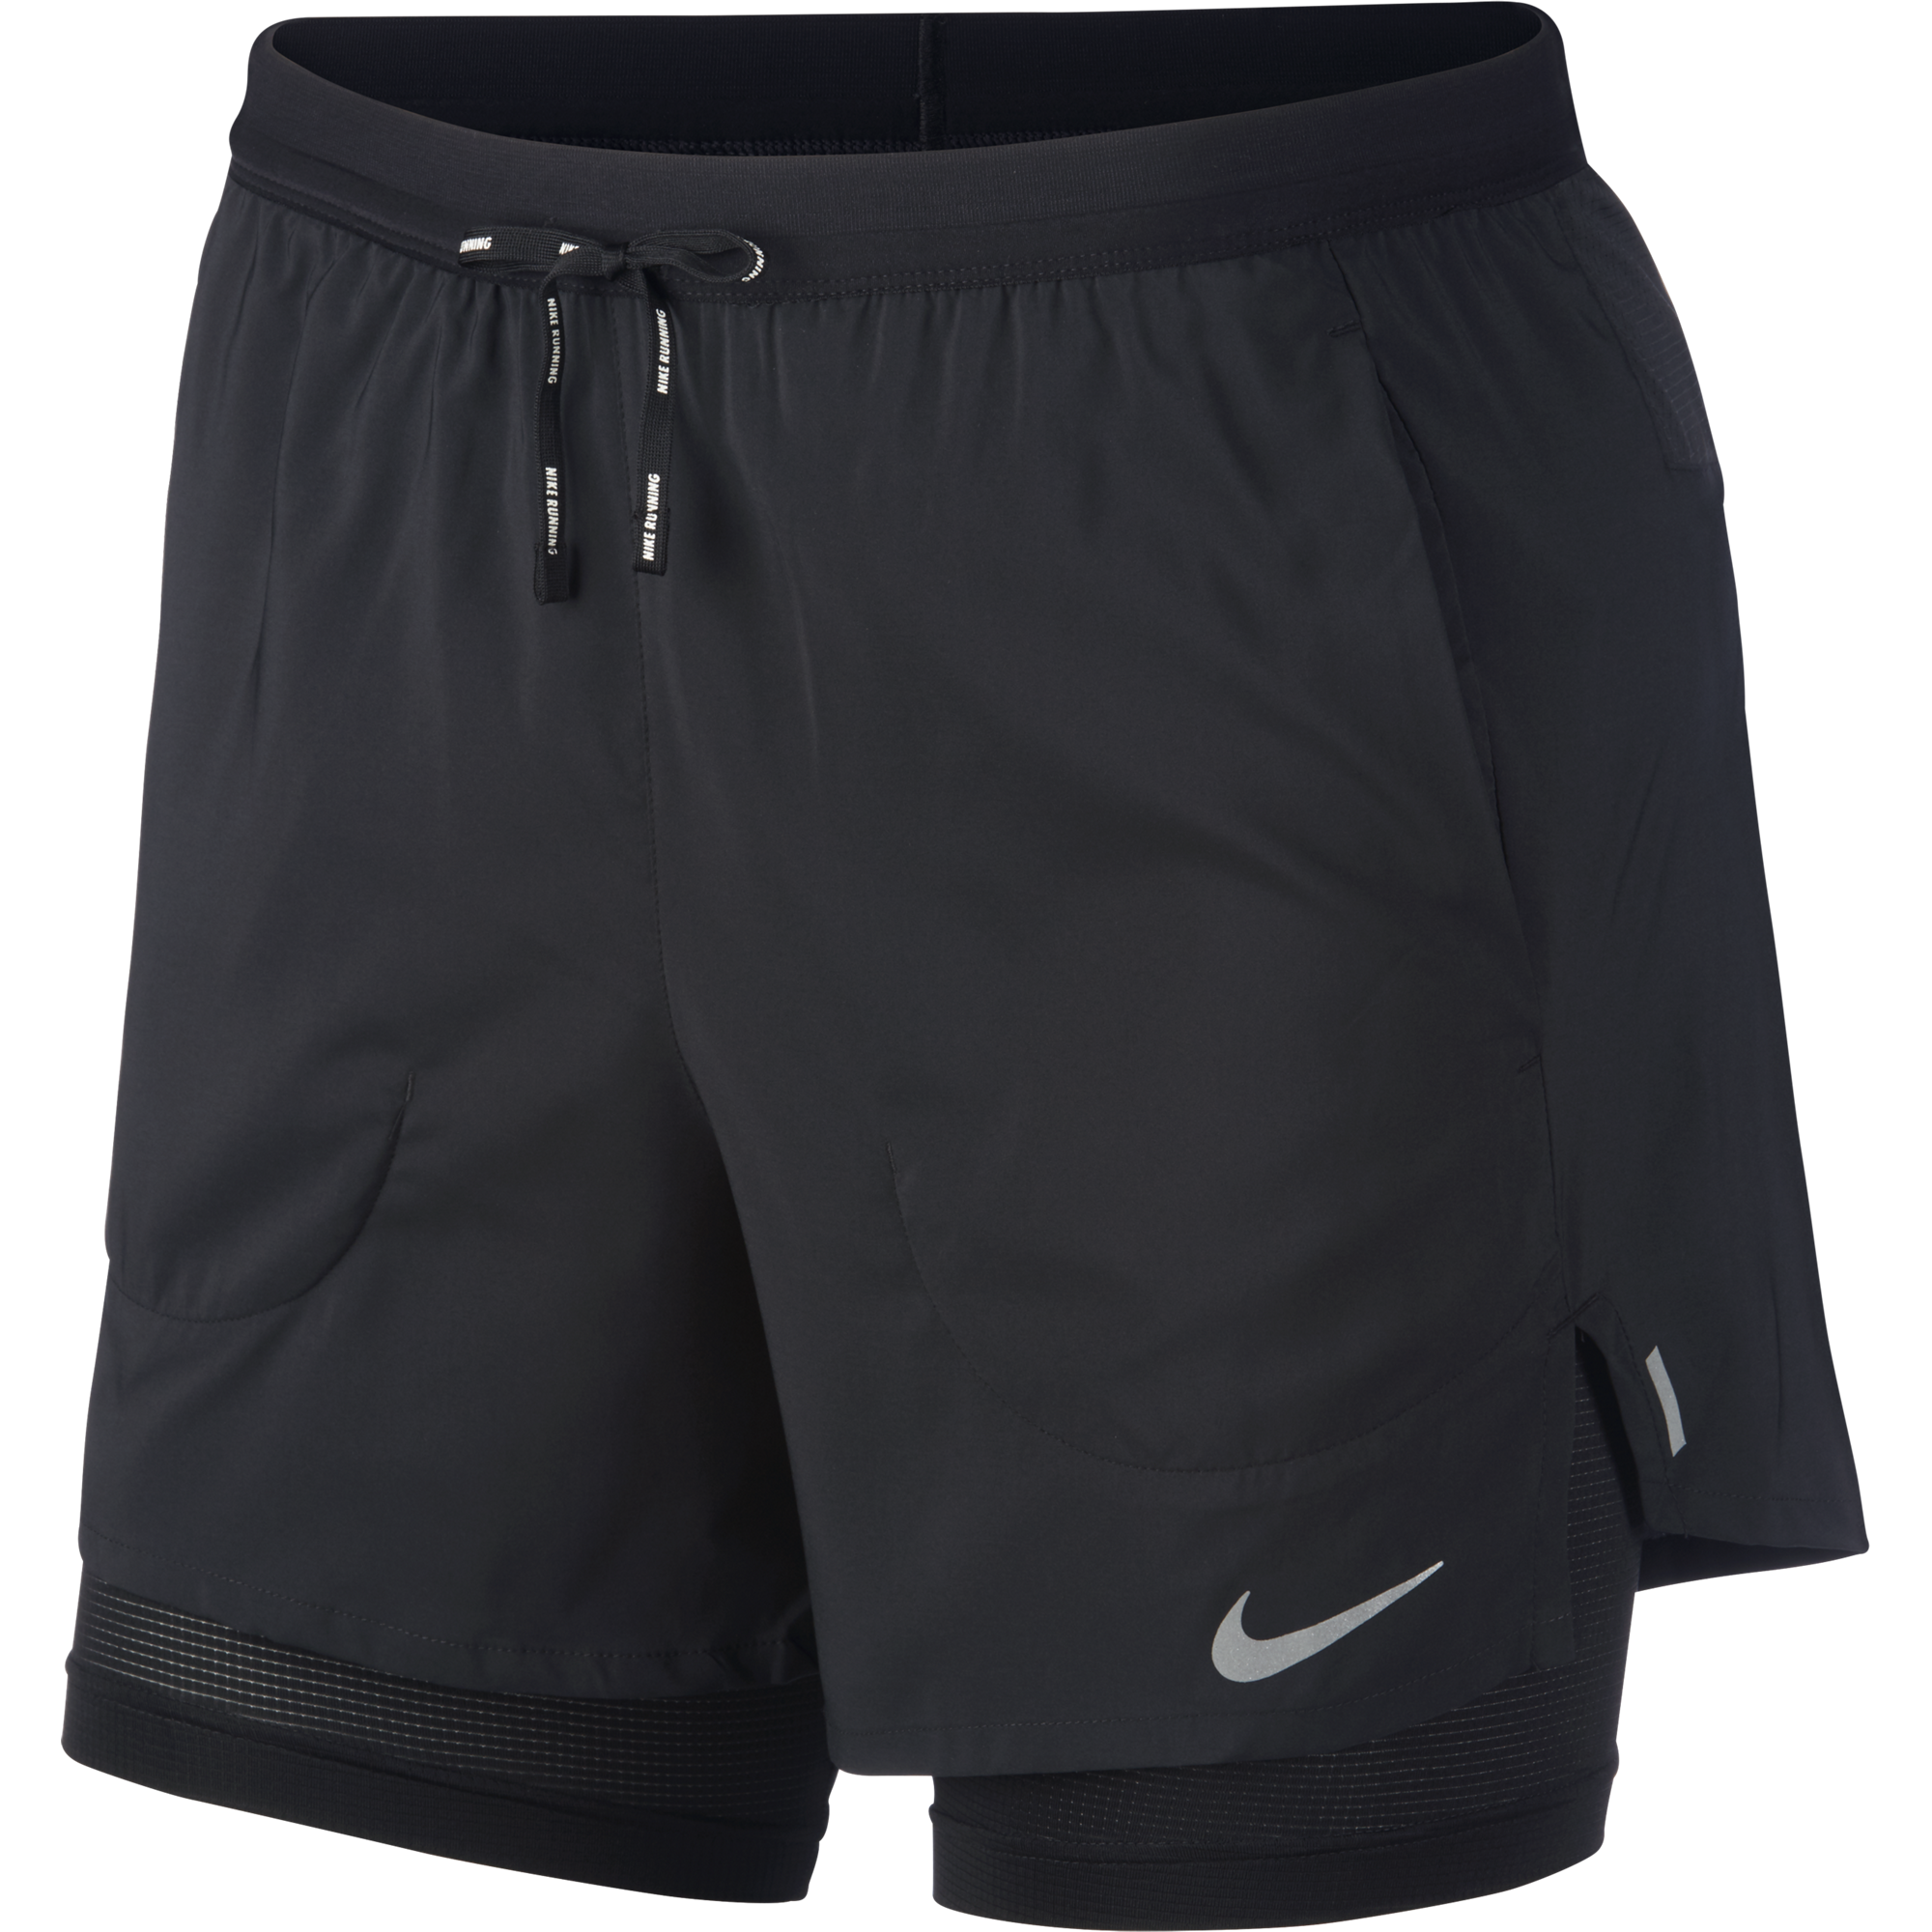 Men's Nike Flex Stride 5 2 in1 Shorts